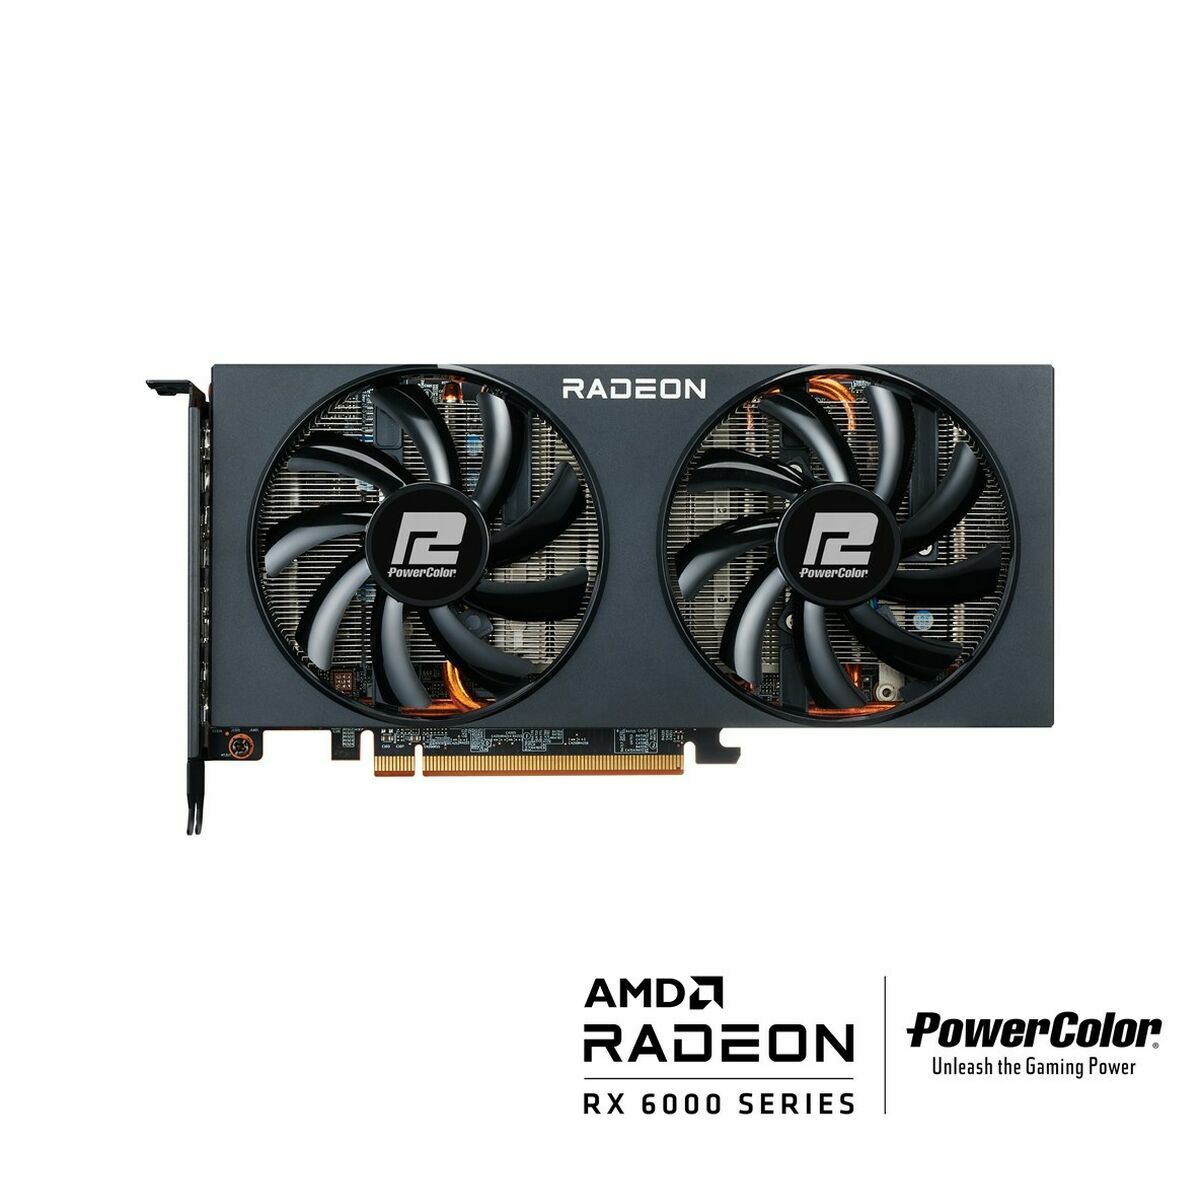 Graphics card Powercolor AMD Radeon RX 6700XT 12 GB RAM 12 GB